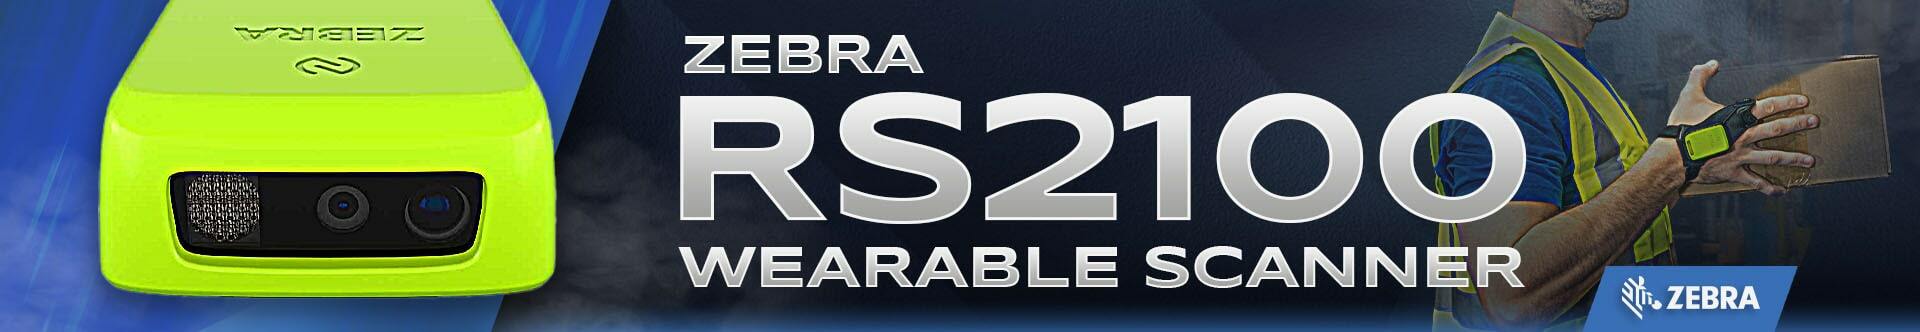 Zebra RS2100 Wearable Barcode Scanner